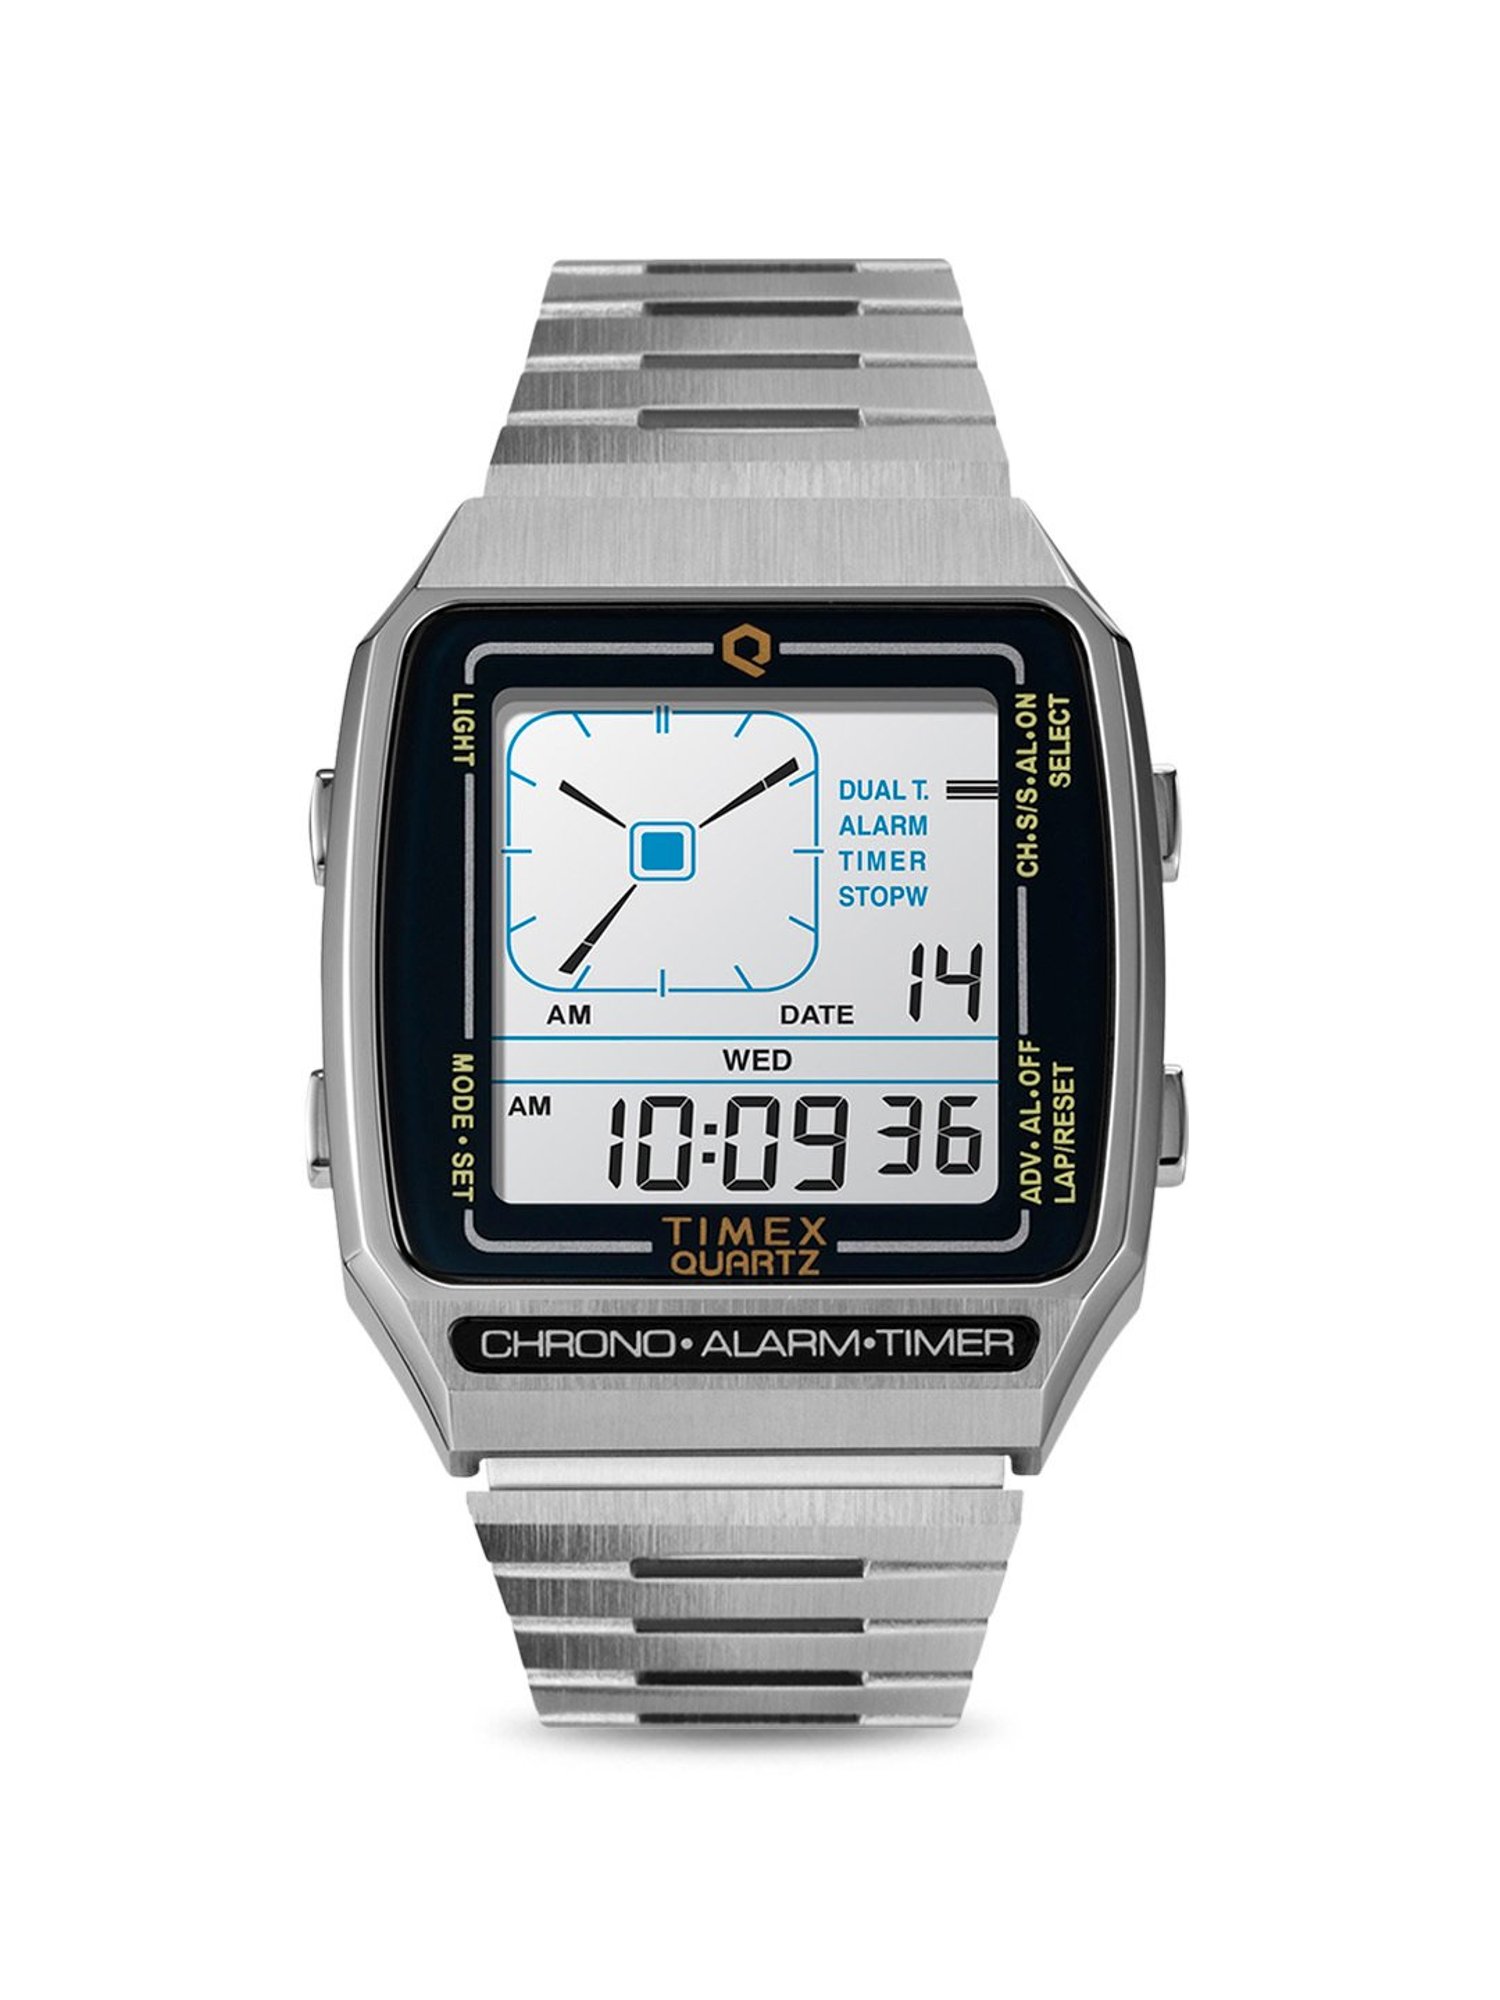 Korslon - luxury minimalist watches that combine quality, aesthetics,  customizability. | Minimalist watch, Custom watch, Watch case